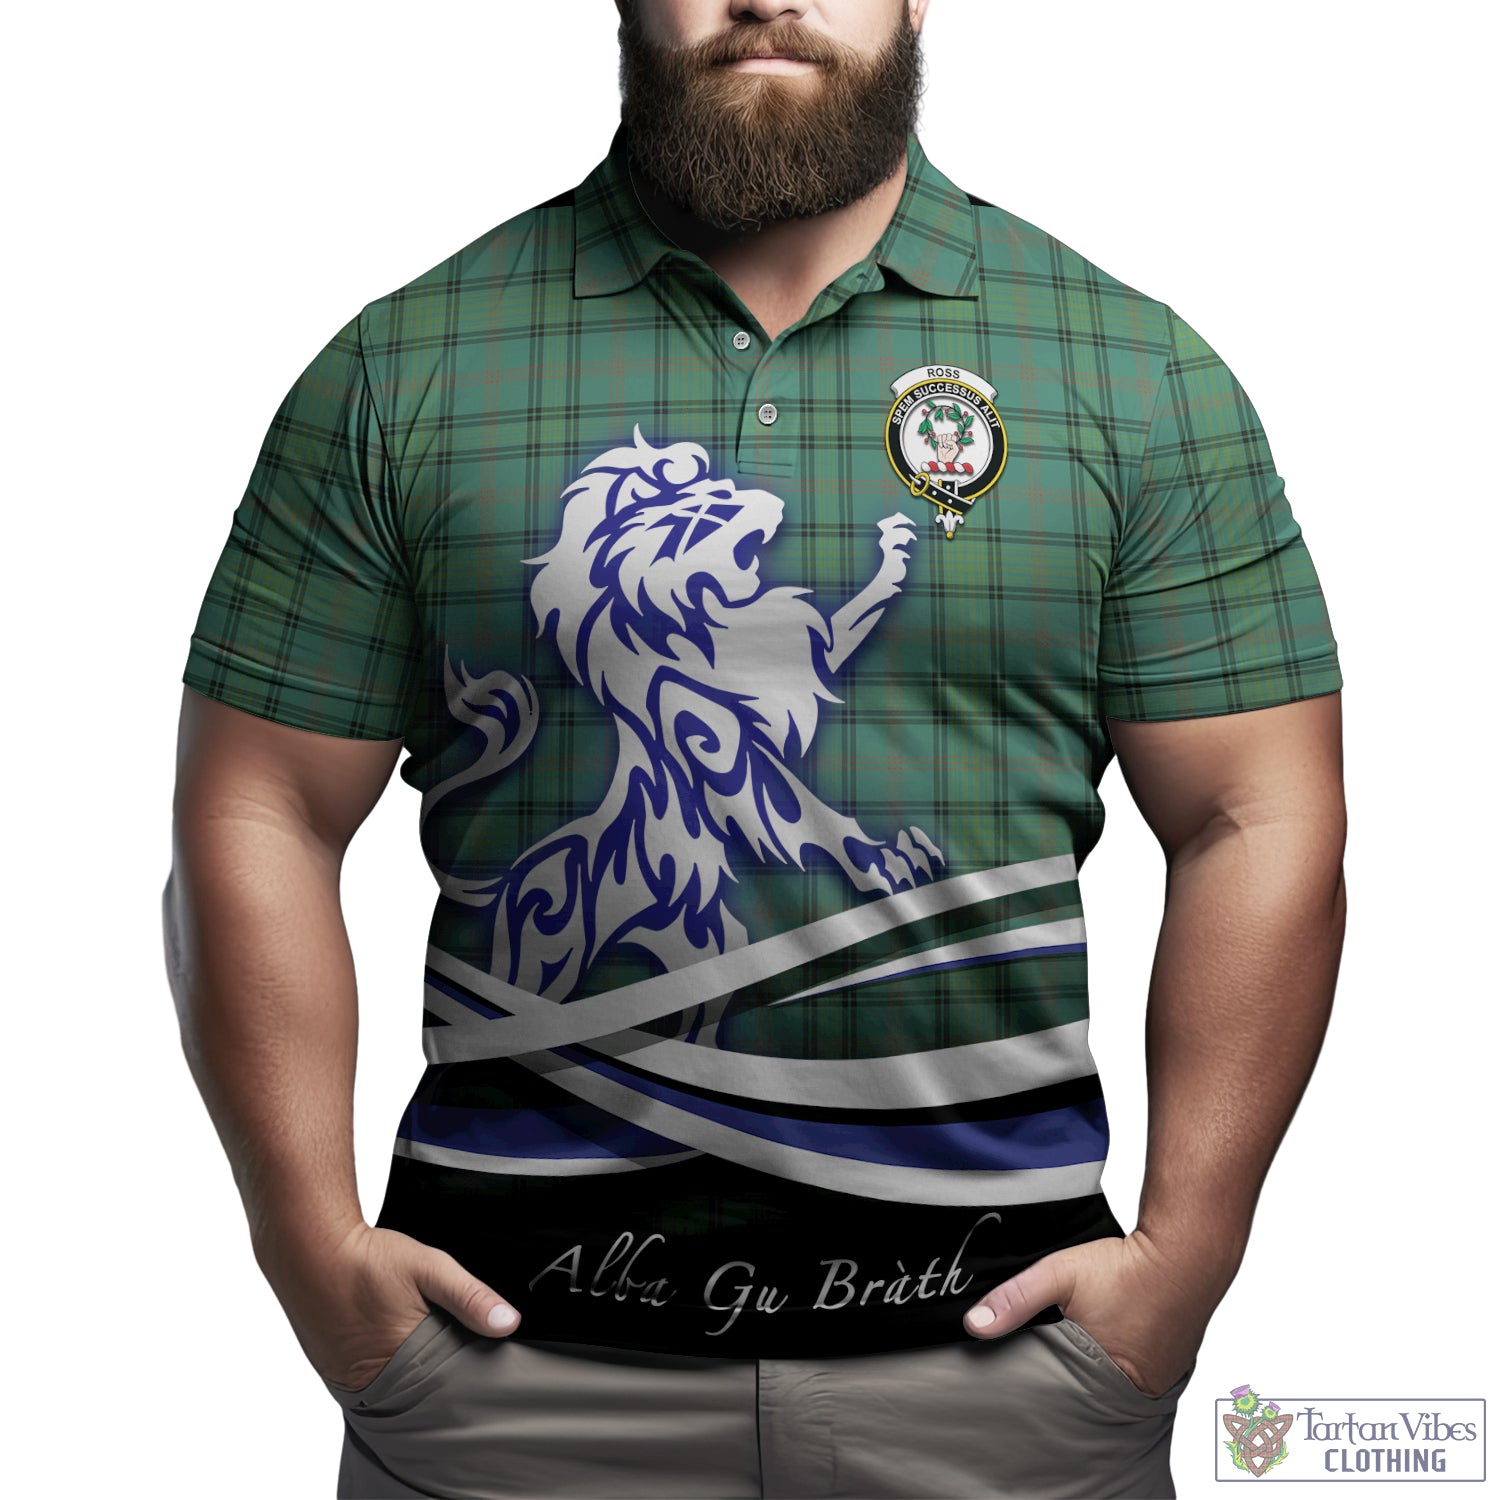 ross-hunting-ancient-tartan-polo-shirt-with-alba-gu-brath-regal-lion-emblem